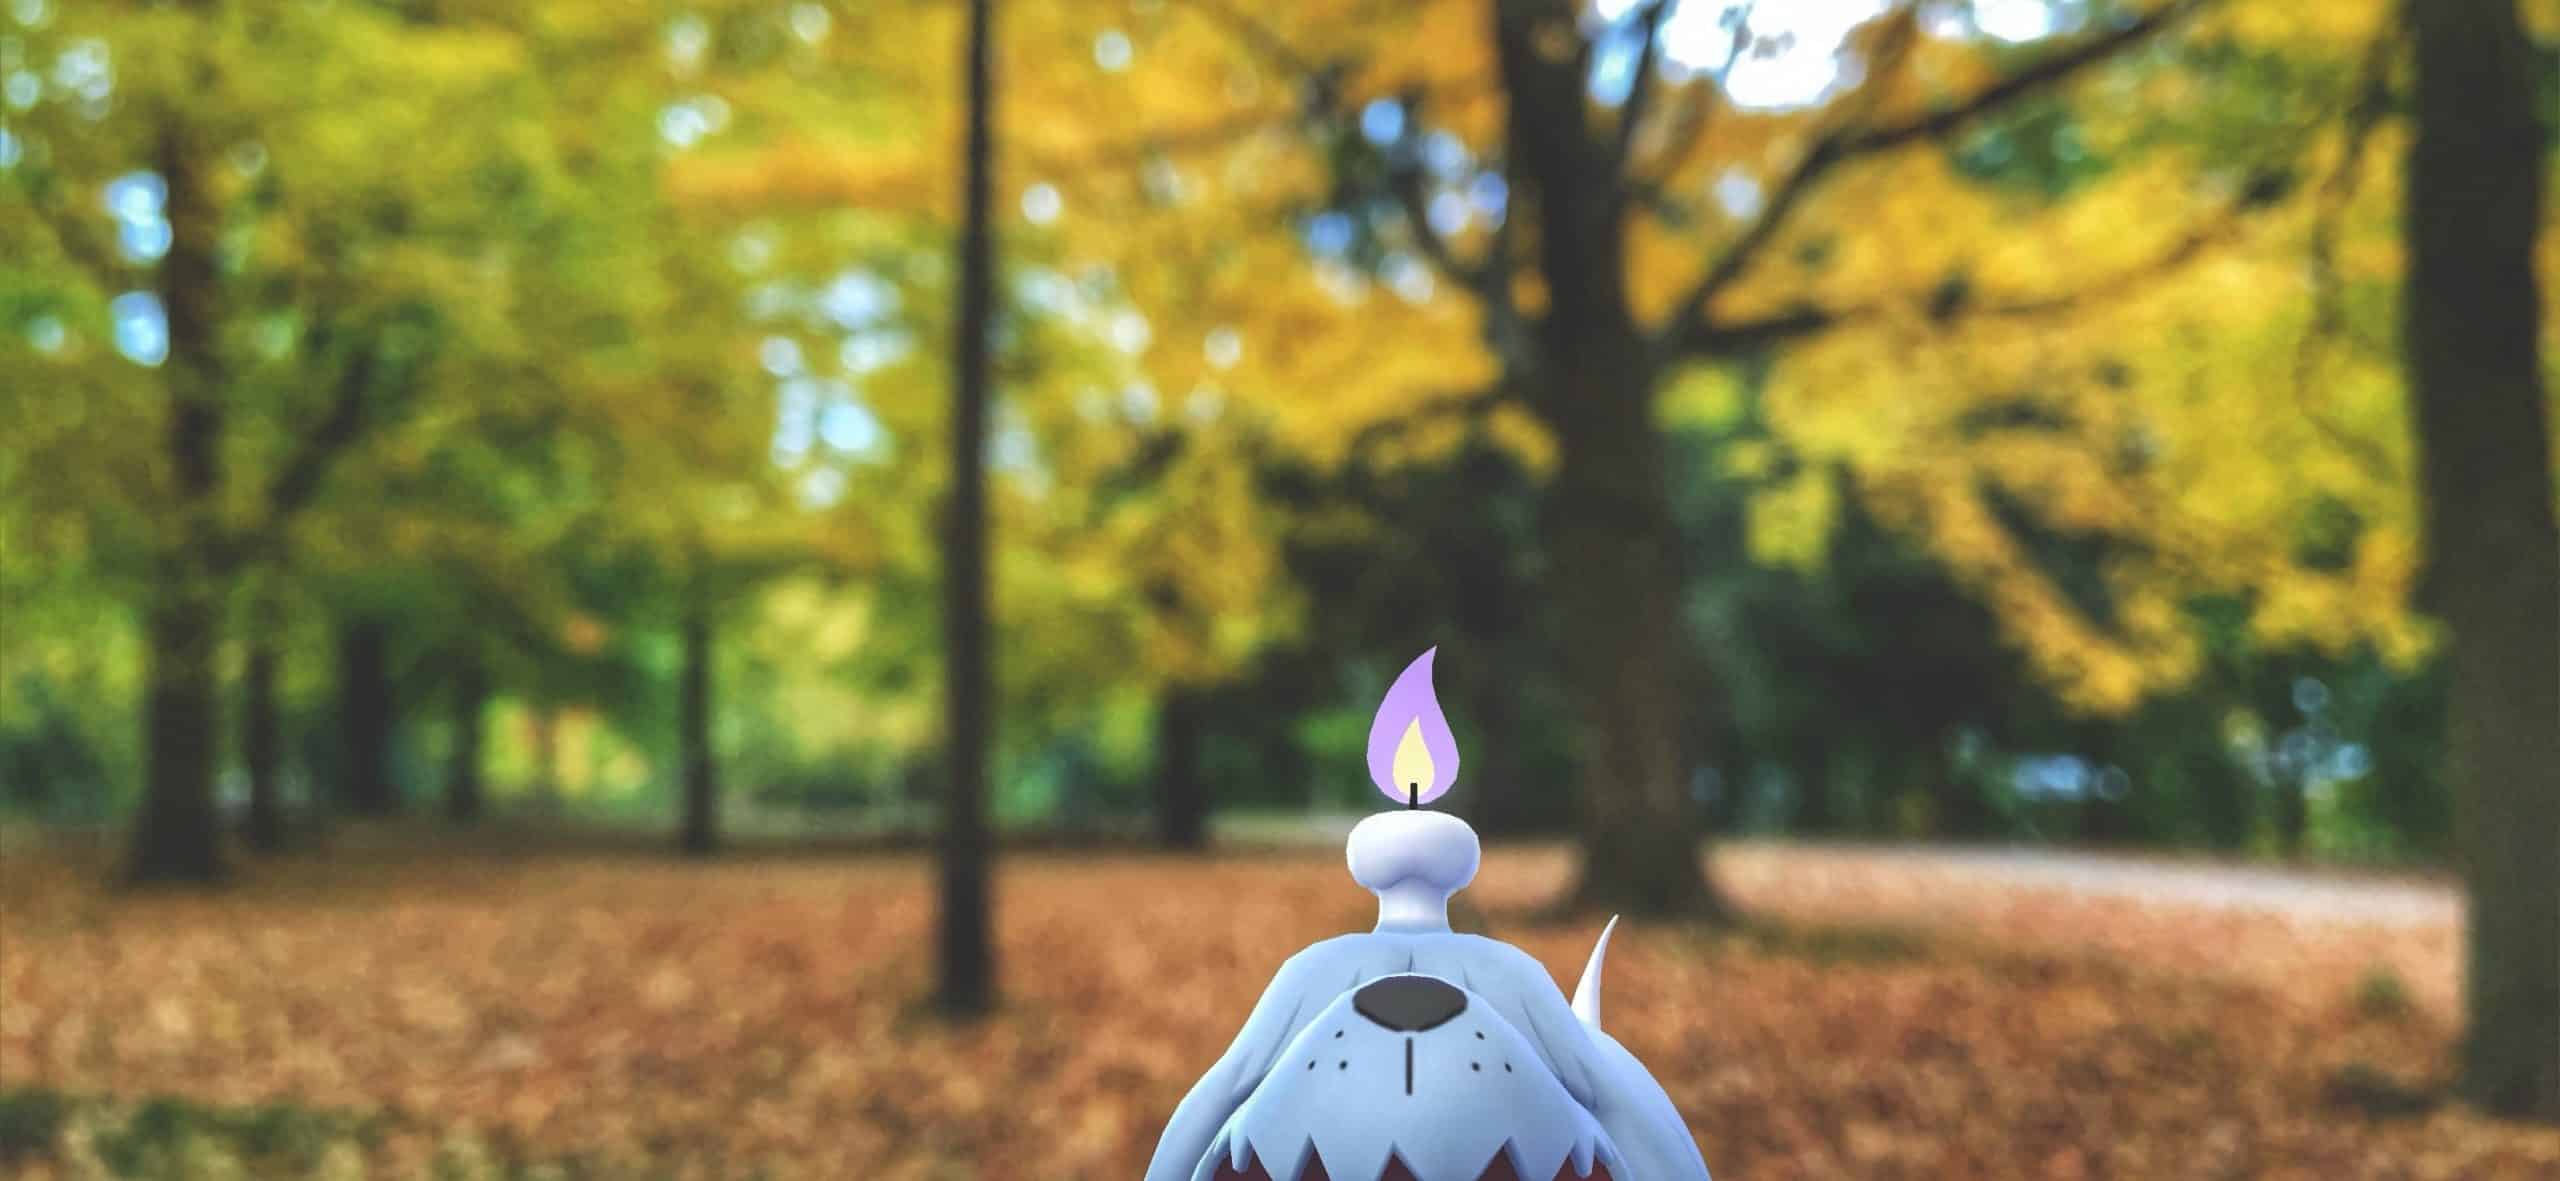 Pokemon Sleep Halloween Event Announced For Late October 2023